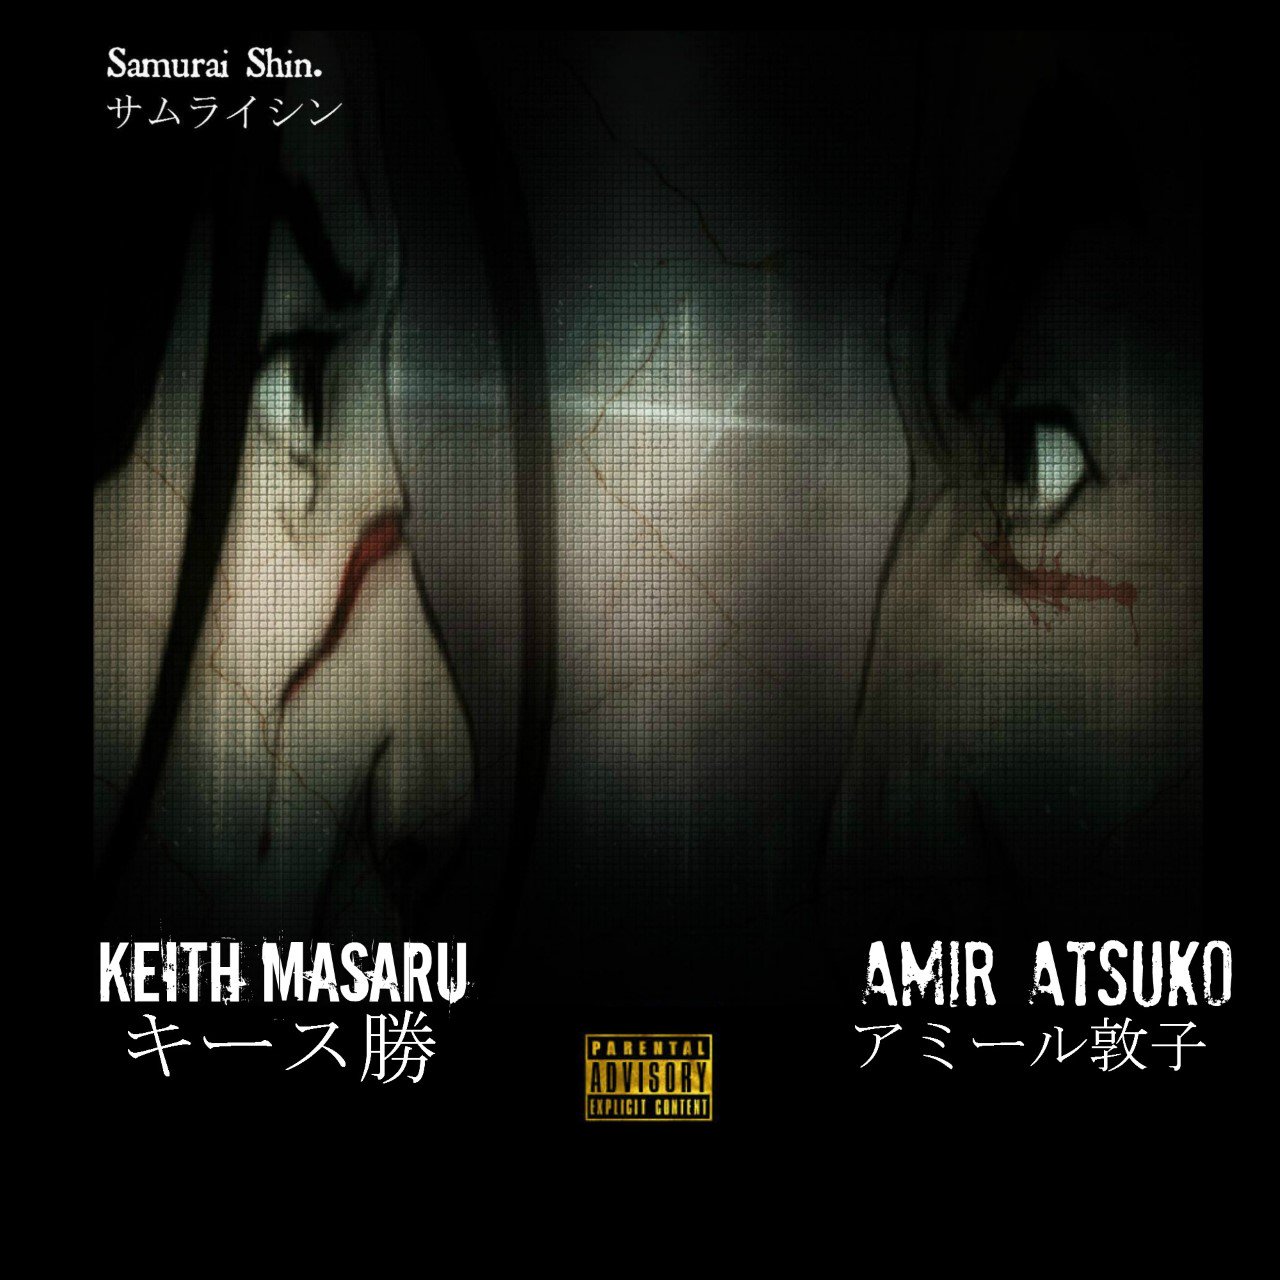  Samurai Shin – Original Soundtrack